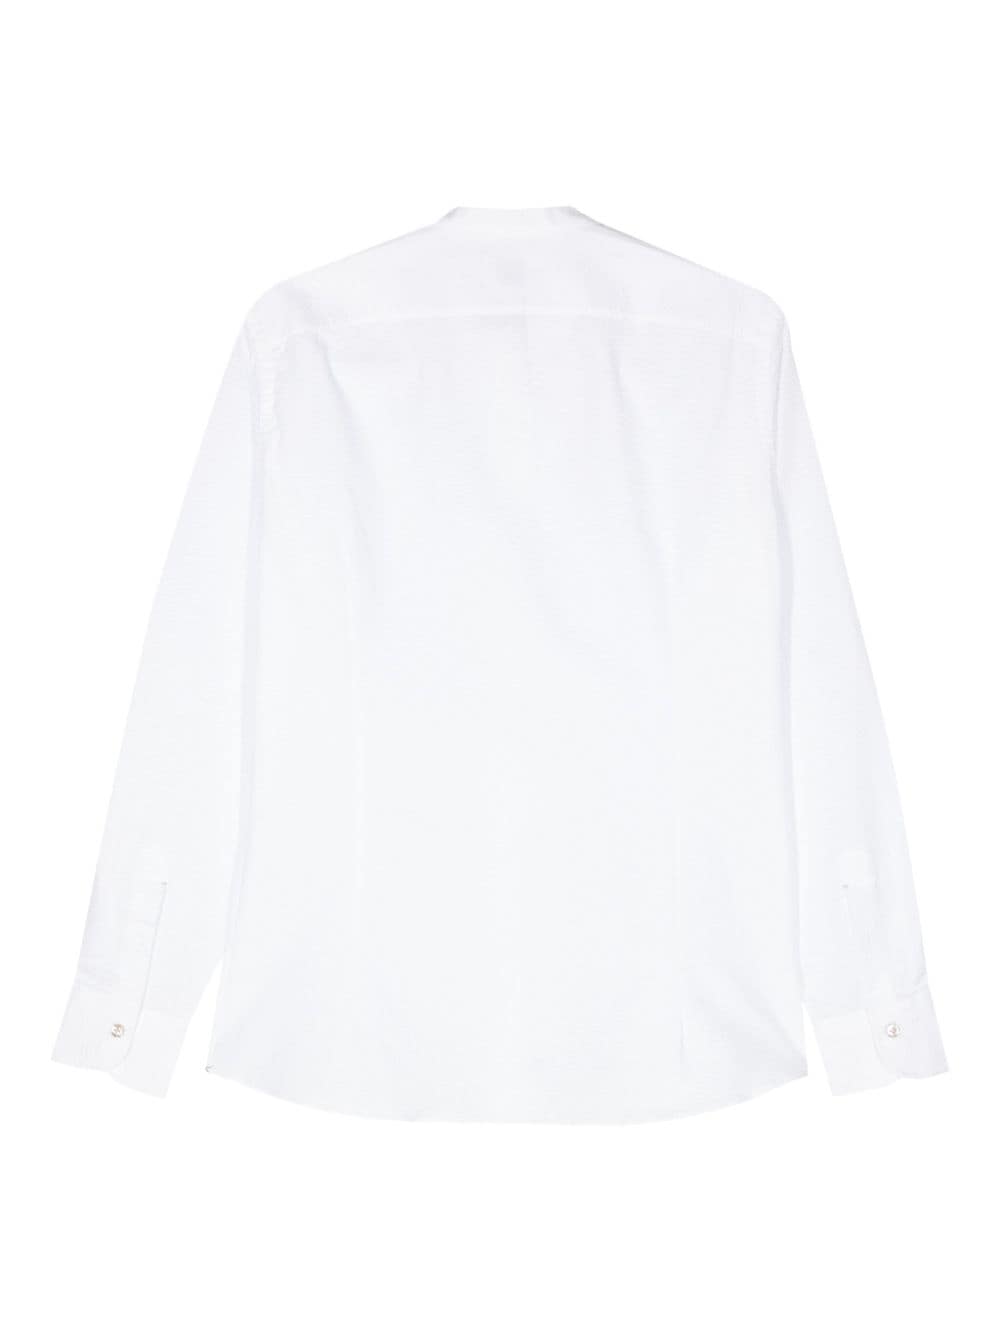 Image 2 of Mazzarelli chemise en coton